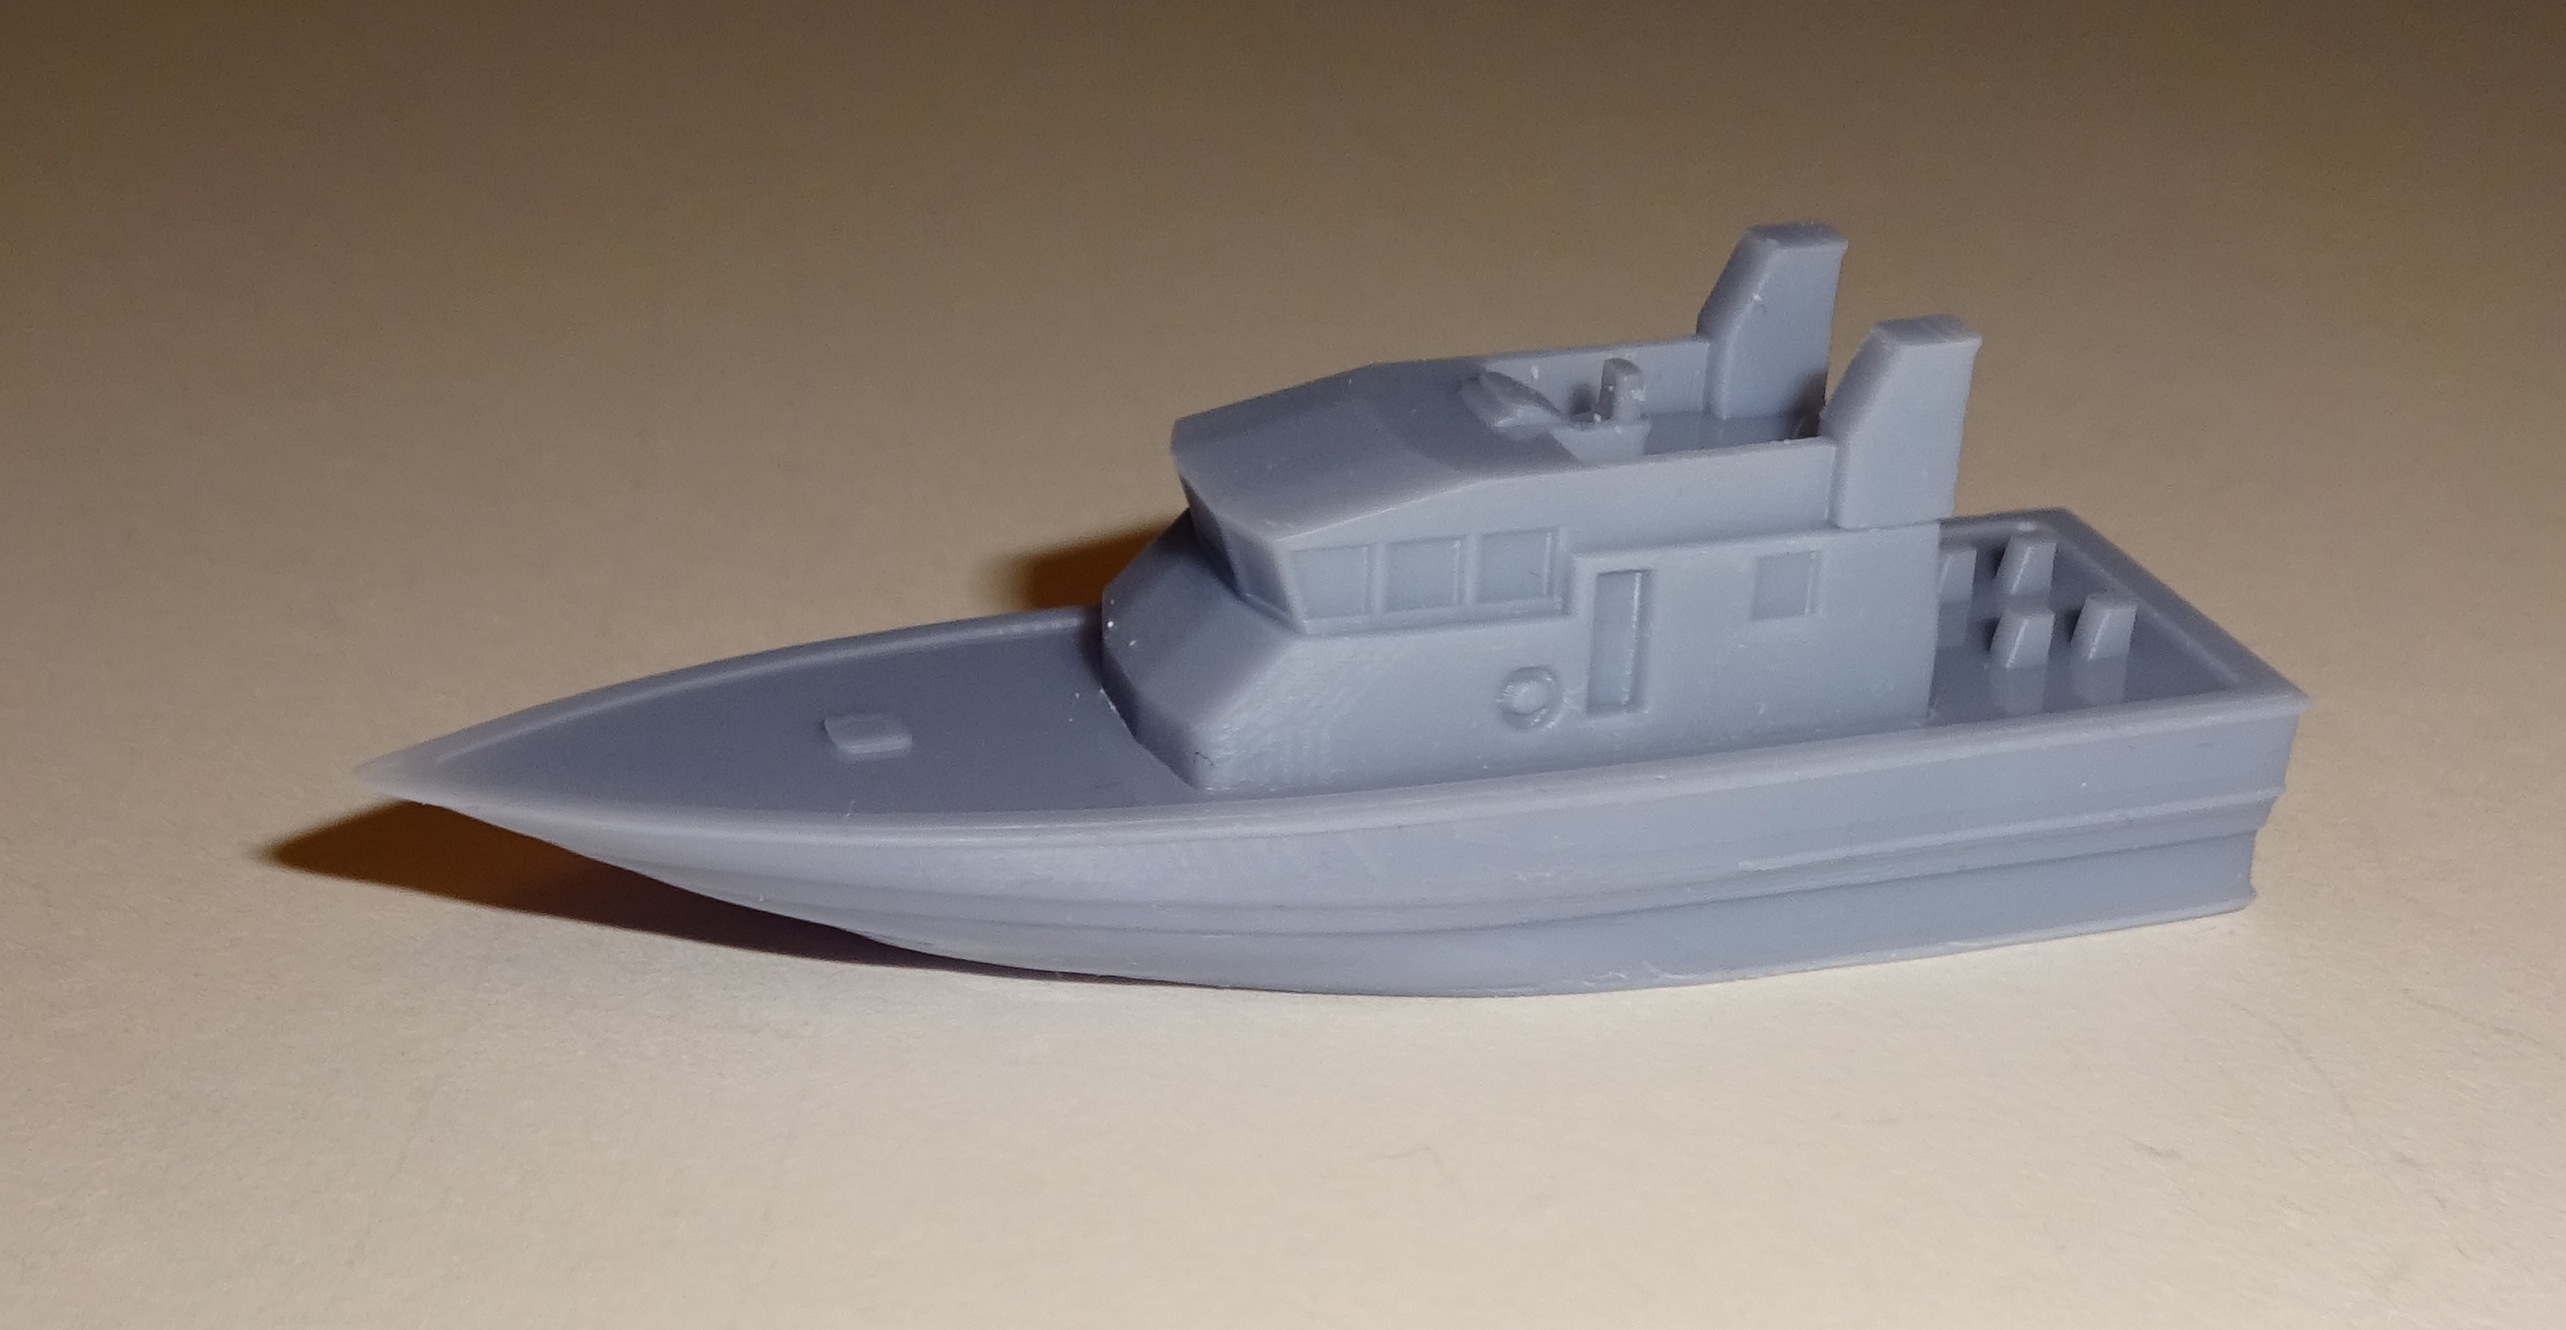 Coastal Craft Vickers 0.303 inch G.O guns x 4 1:72 Scale Model boat Fittings